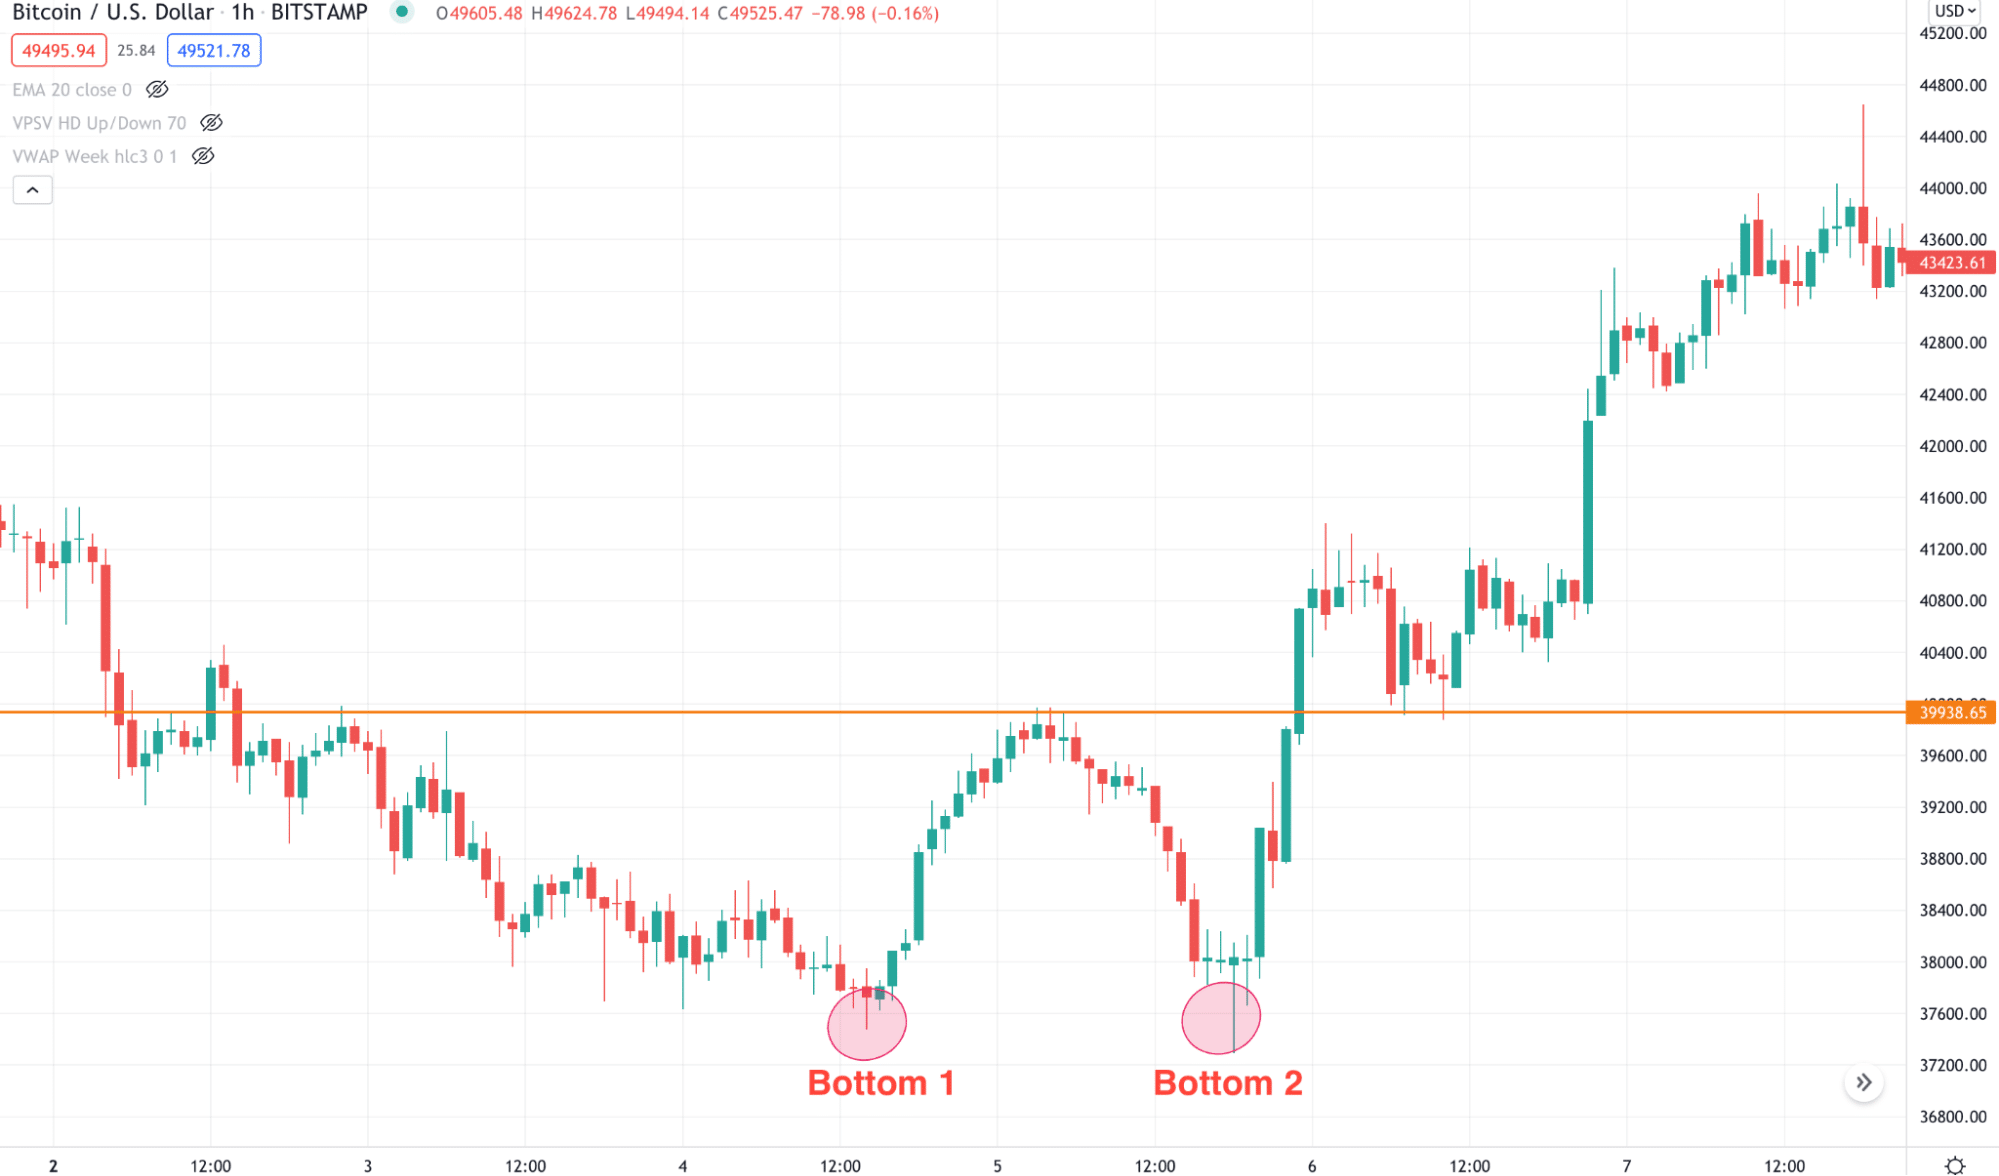 BTC/USD double bottom pattern